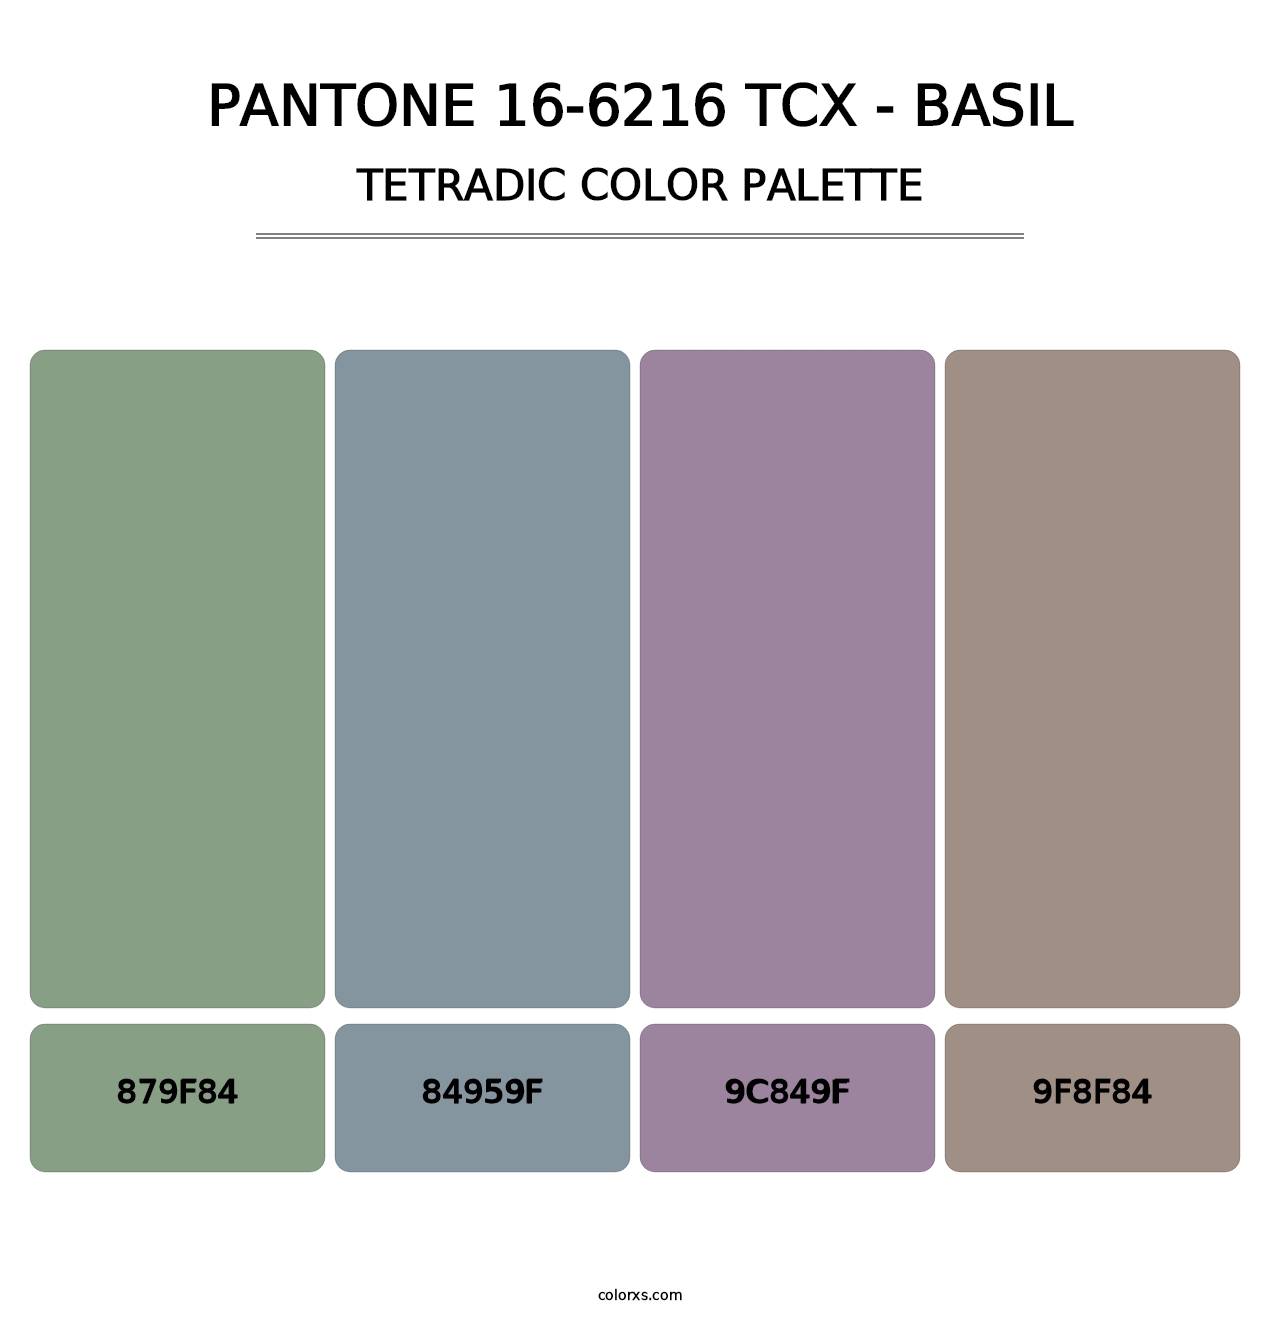 PANTONE 16-6216 TCX - Basil - Tetradic Color Palette